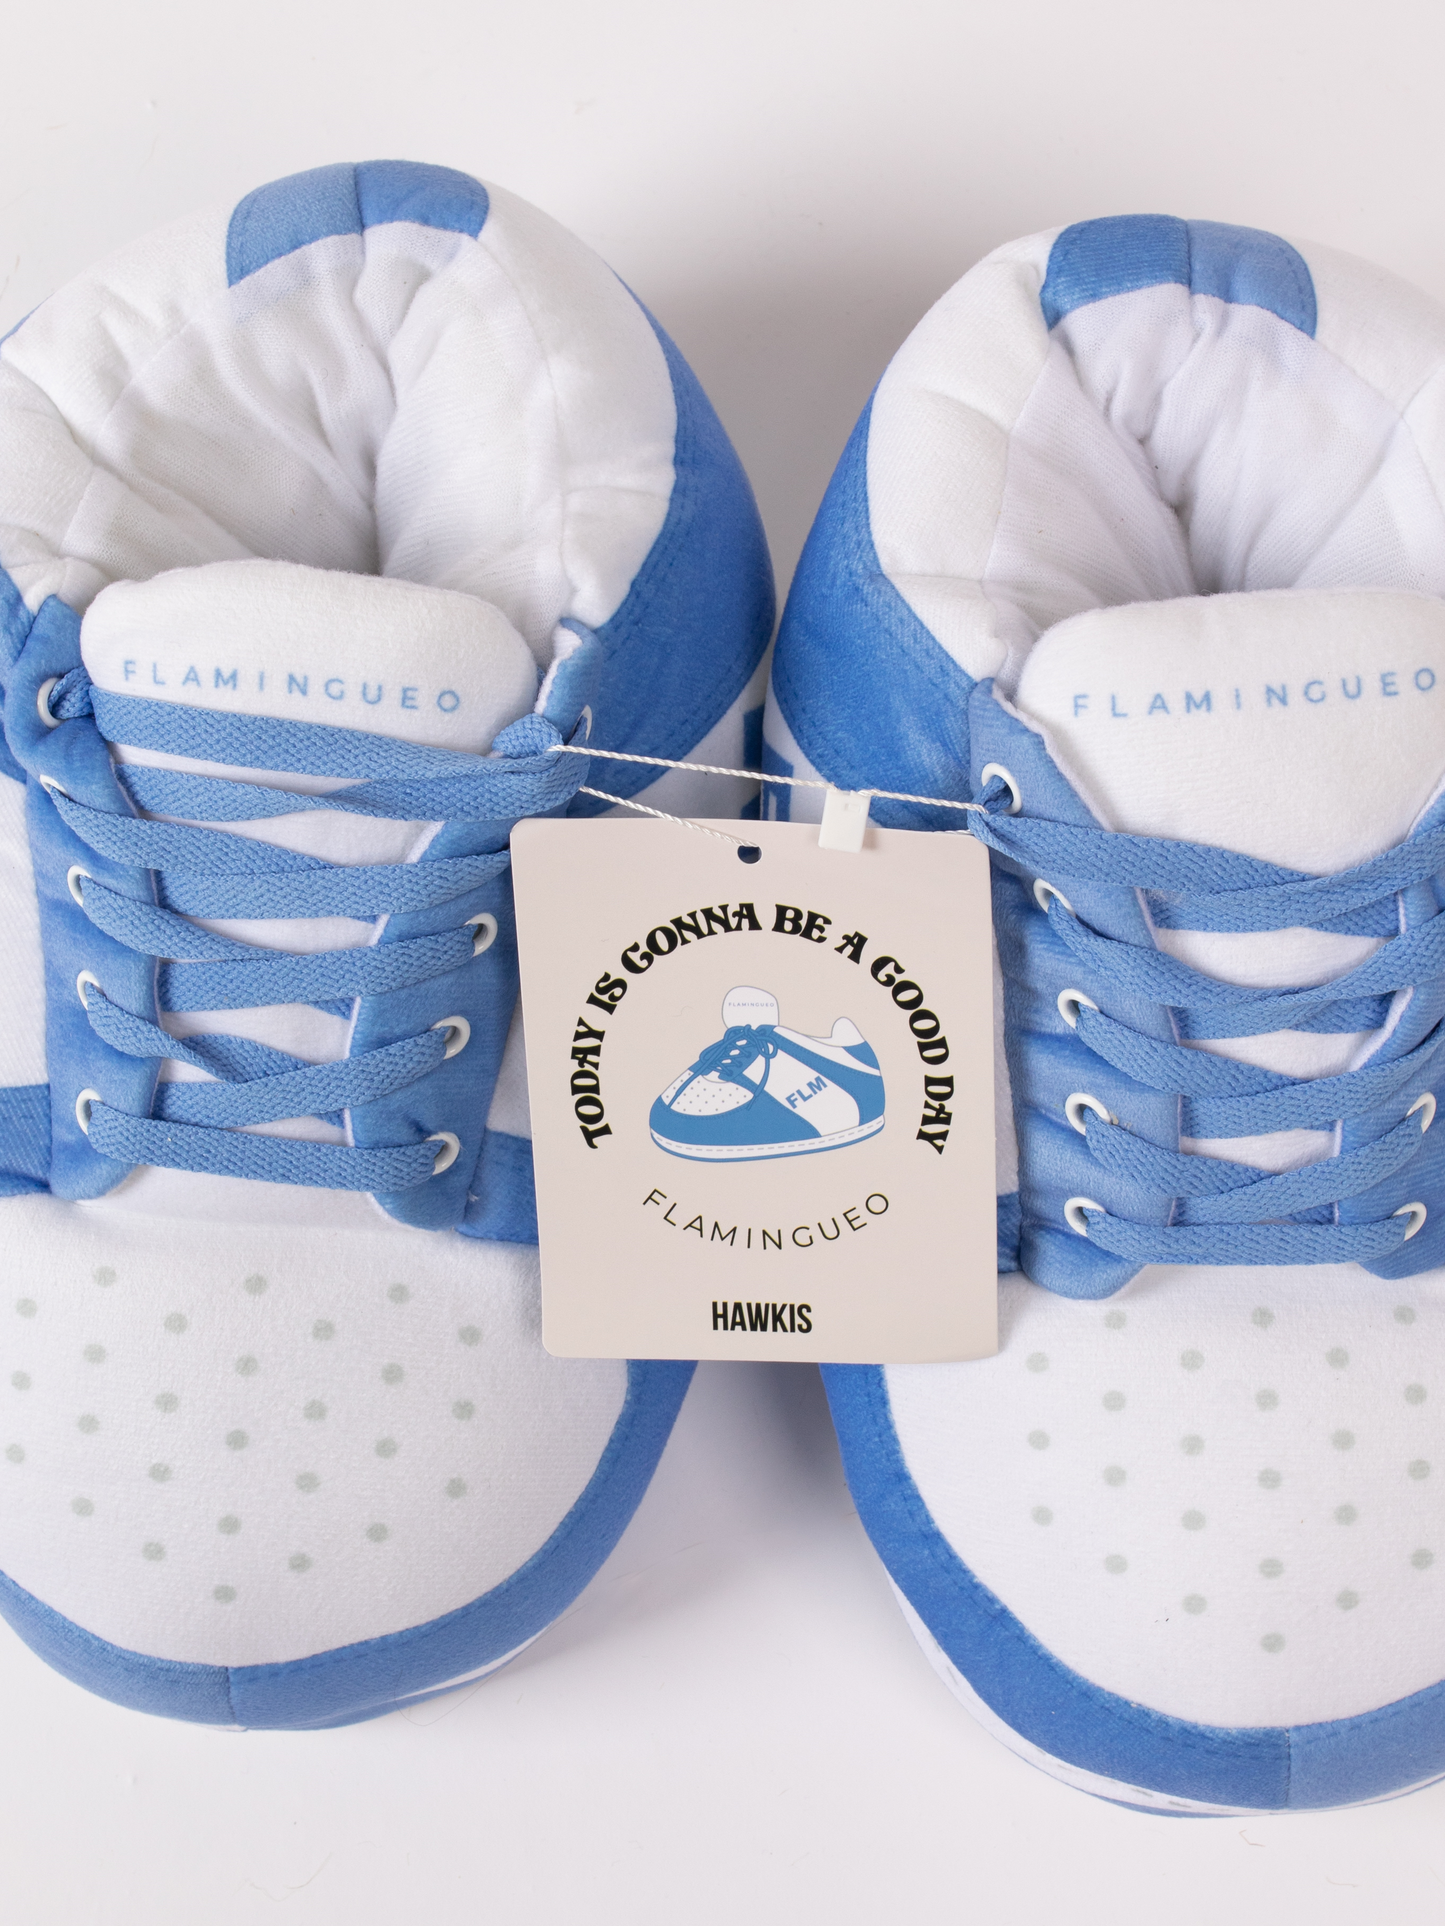 Giant Sneaker Slippers - Hawkis - Blue & White - Unisex - One Size